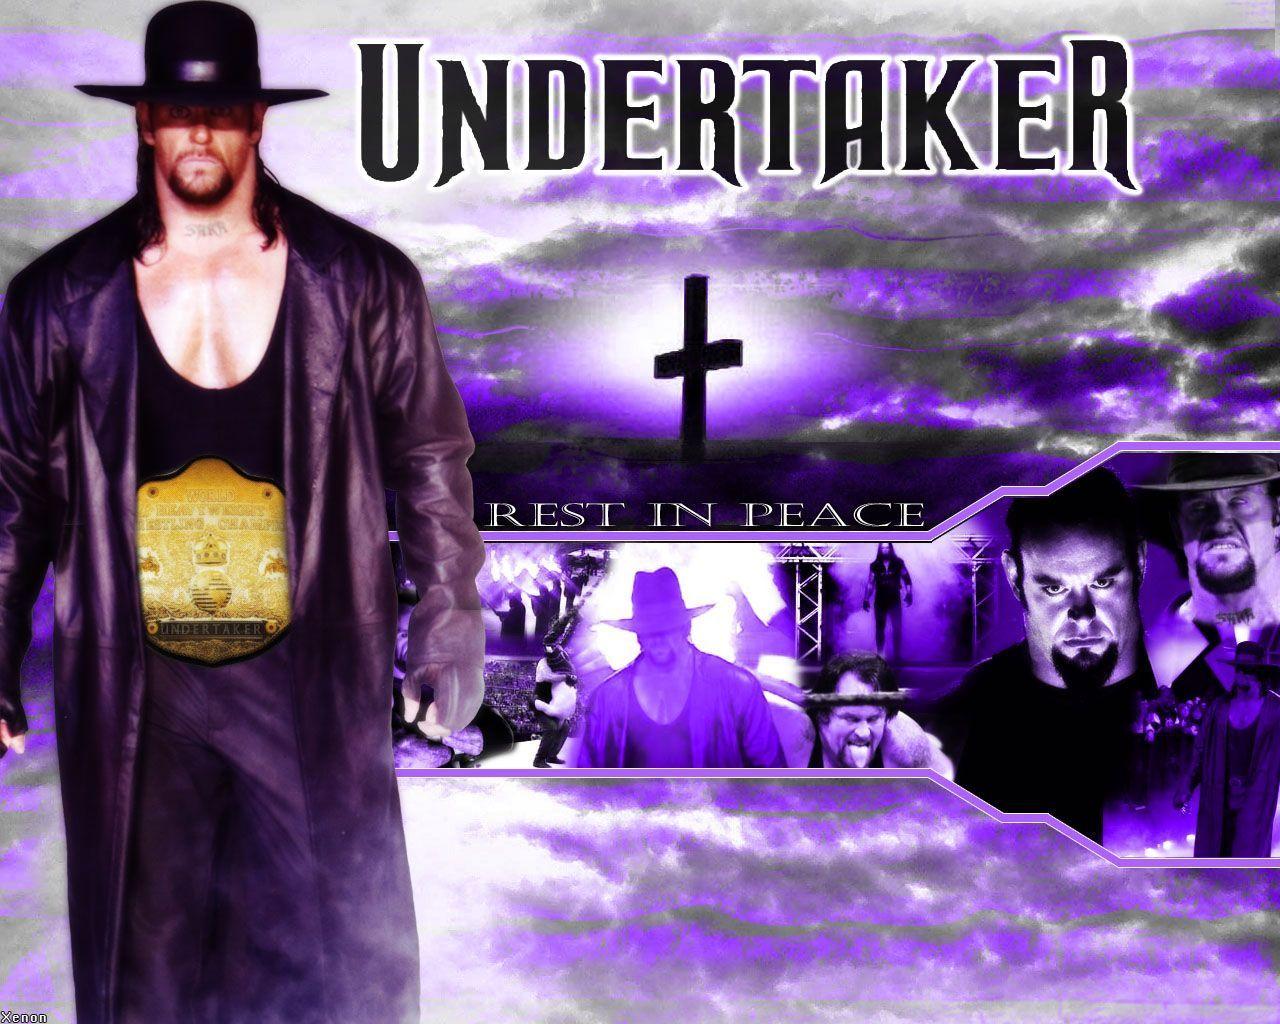 The Undertaker. WWE Fast Lane, WWE Superstars and WWE Wallpaper